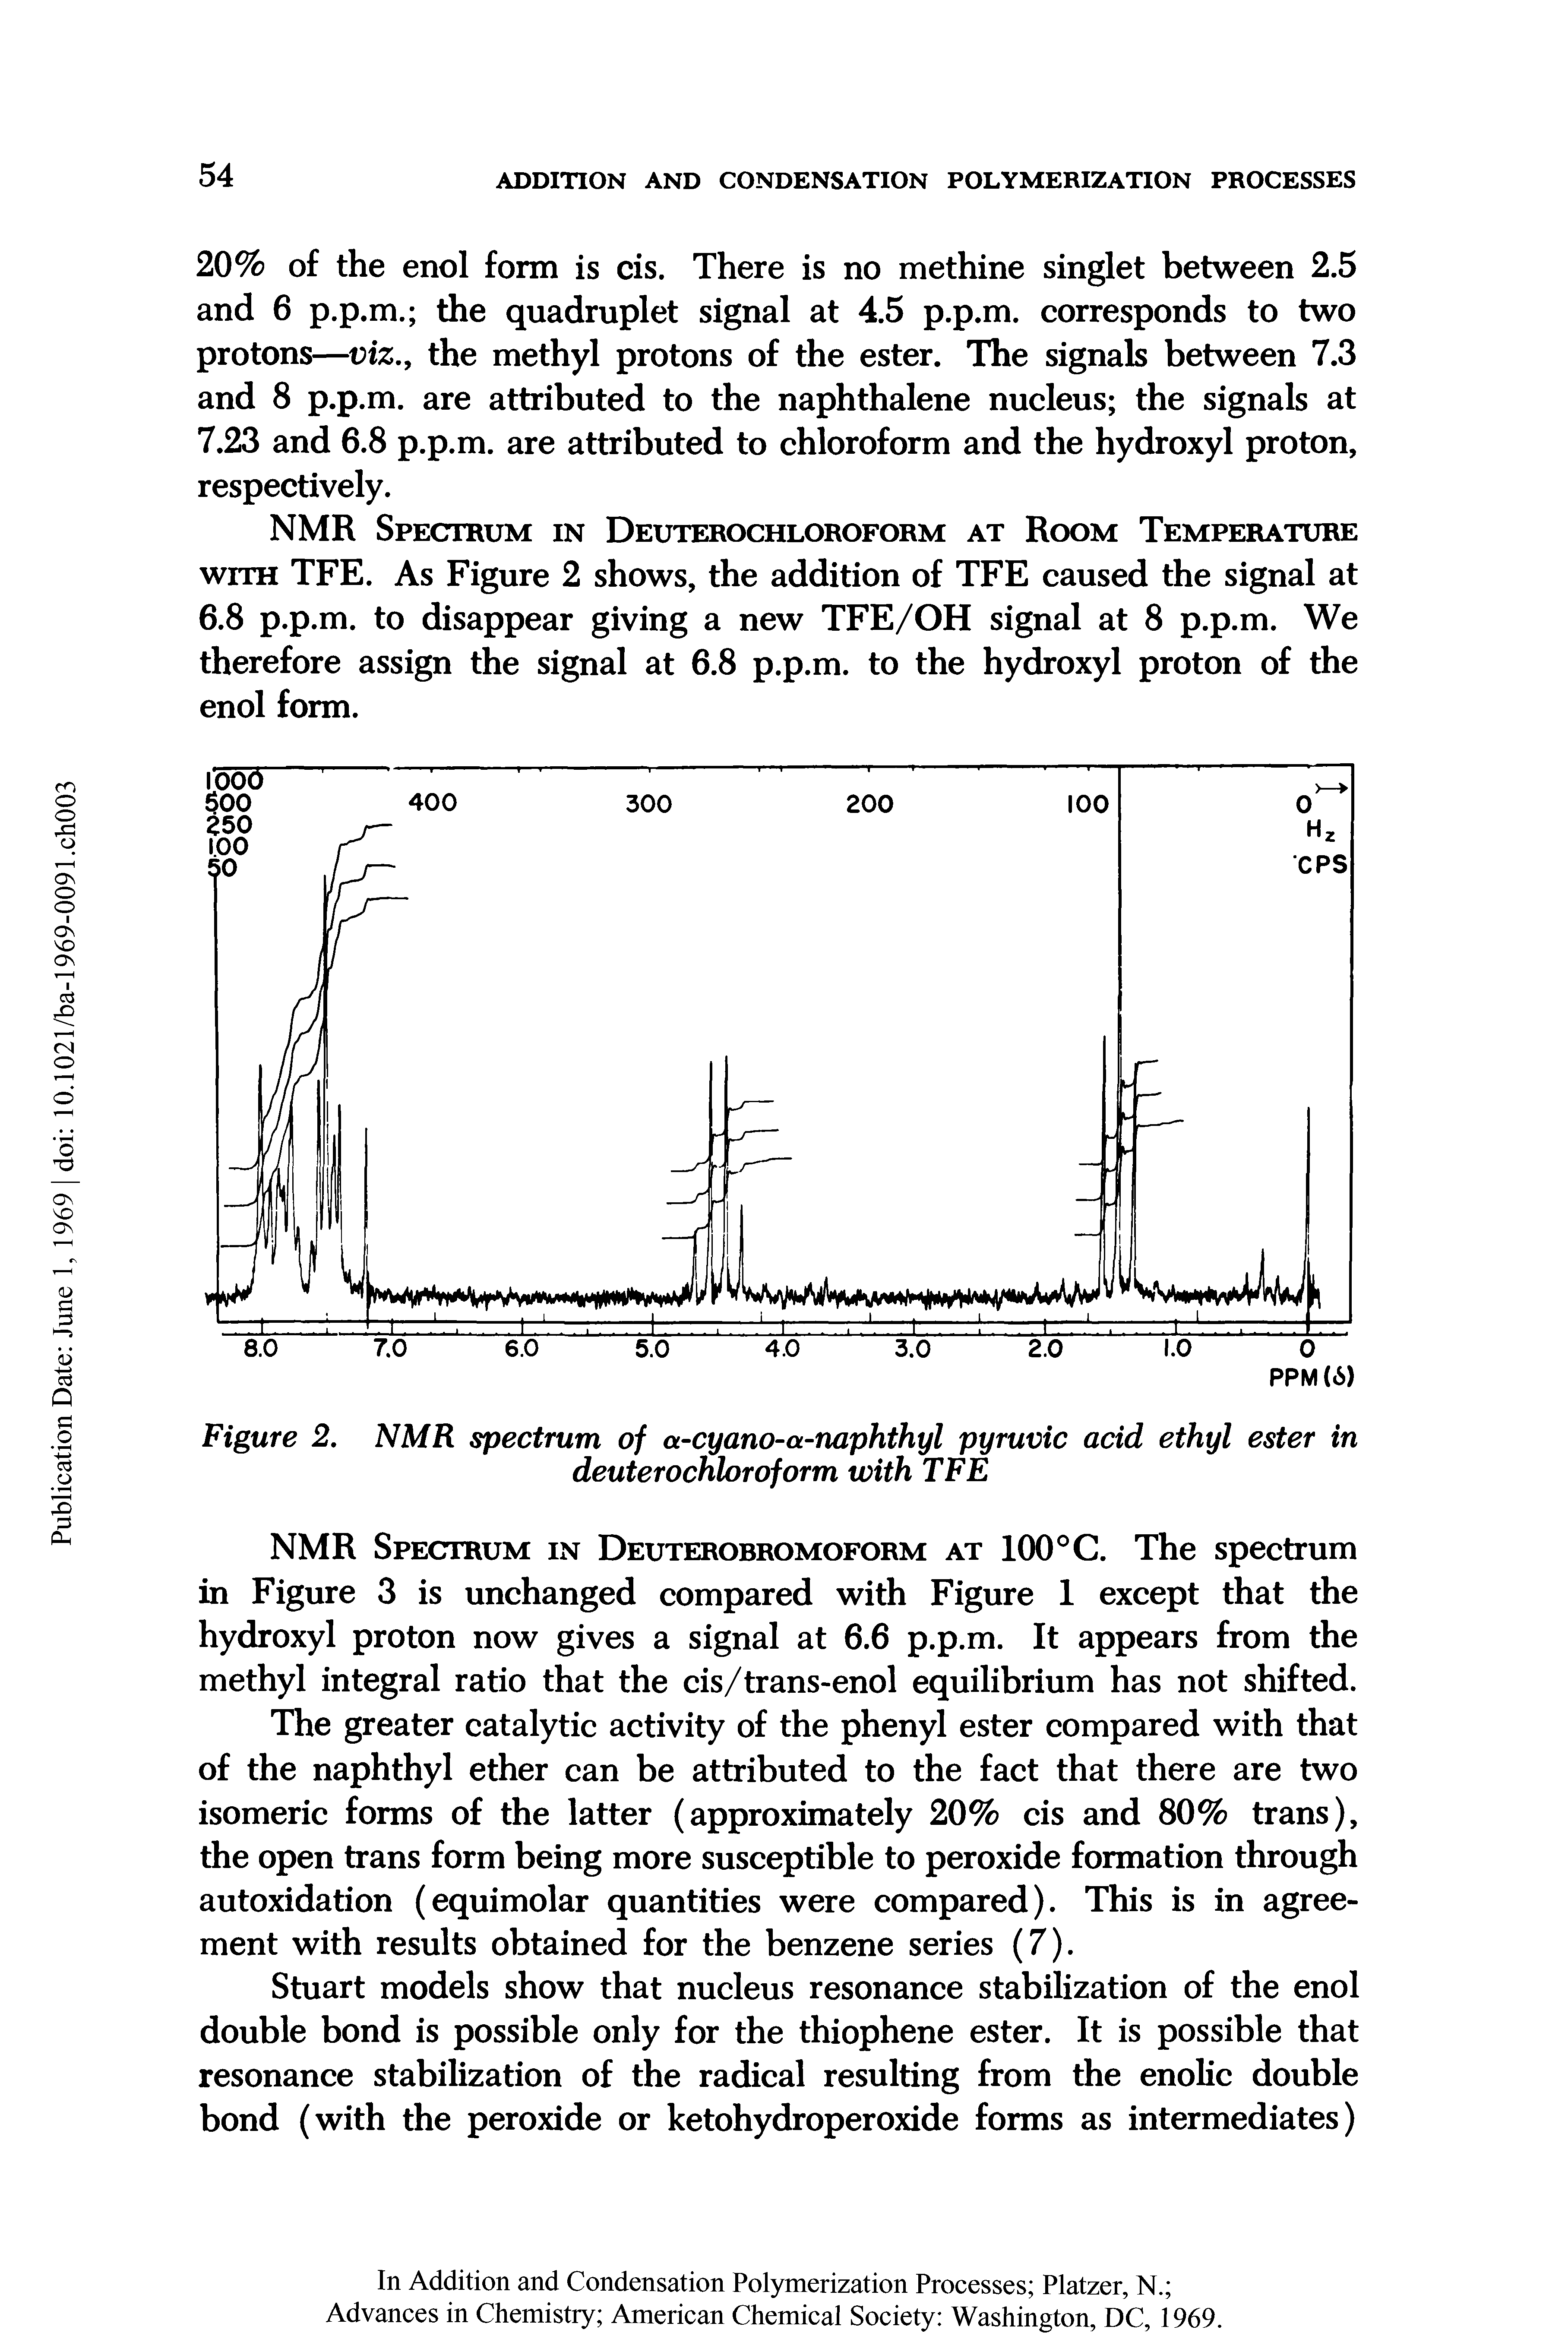 Figure 2. NMR spectrum of a-cyano-a-naphthyl pyruvic acid ethyl ester in deuterochloroform with TFE...